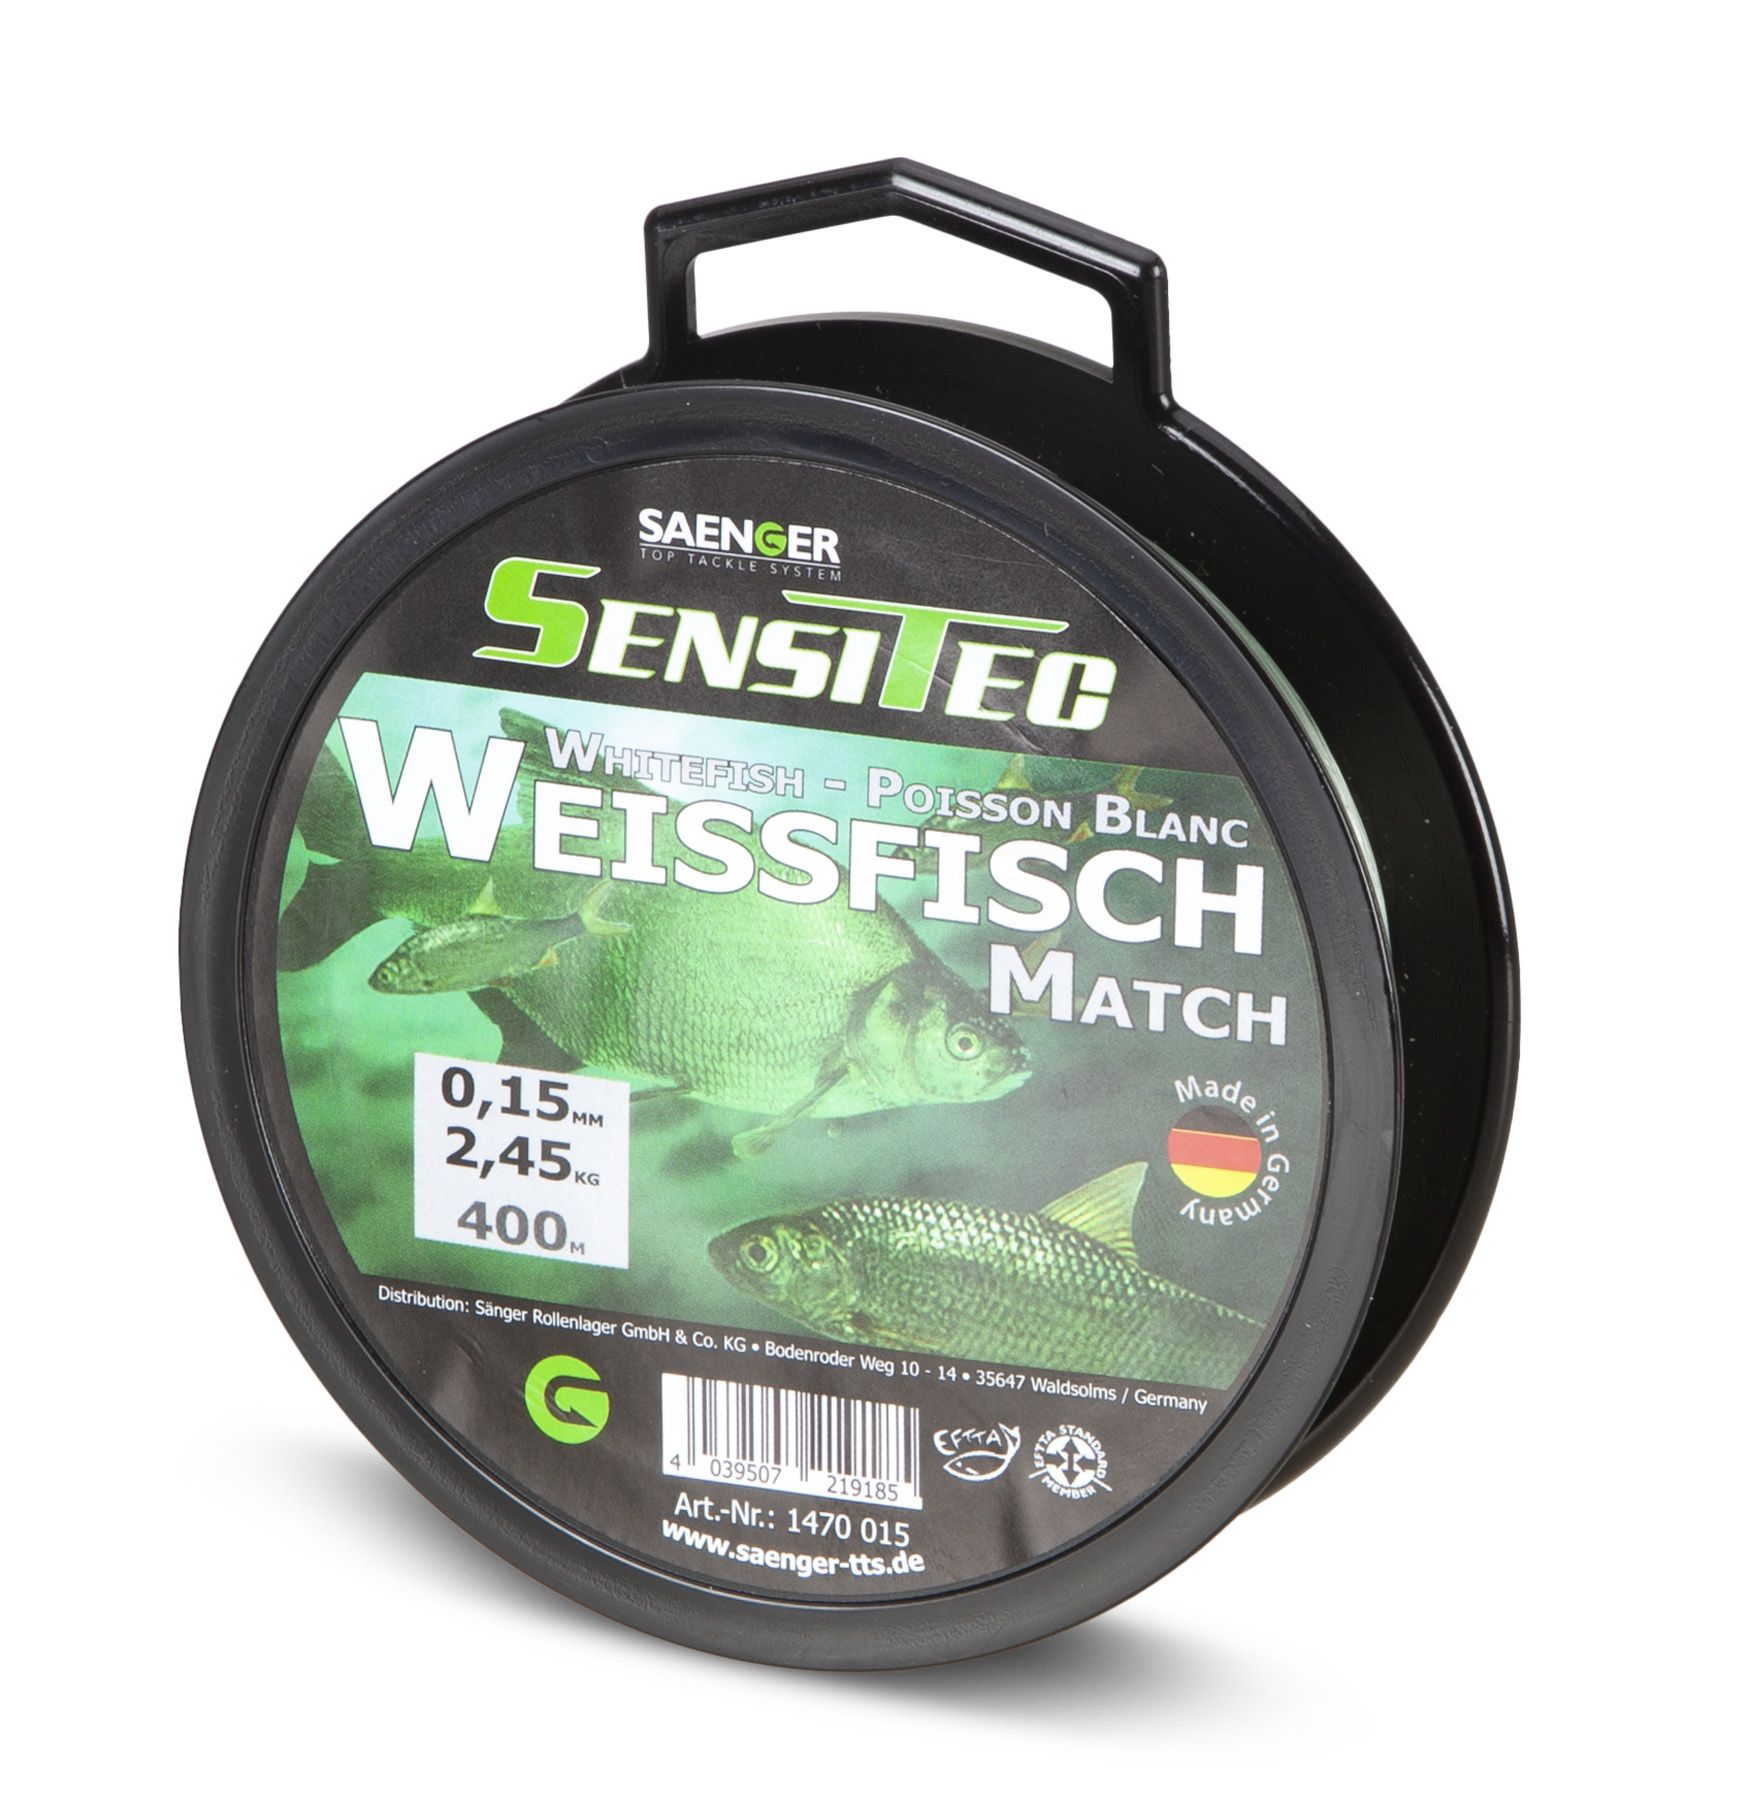 Sensitec Match Weißf. limpid green 400 m 0,18mm